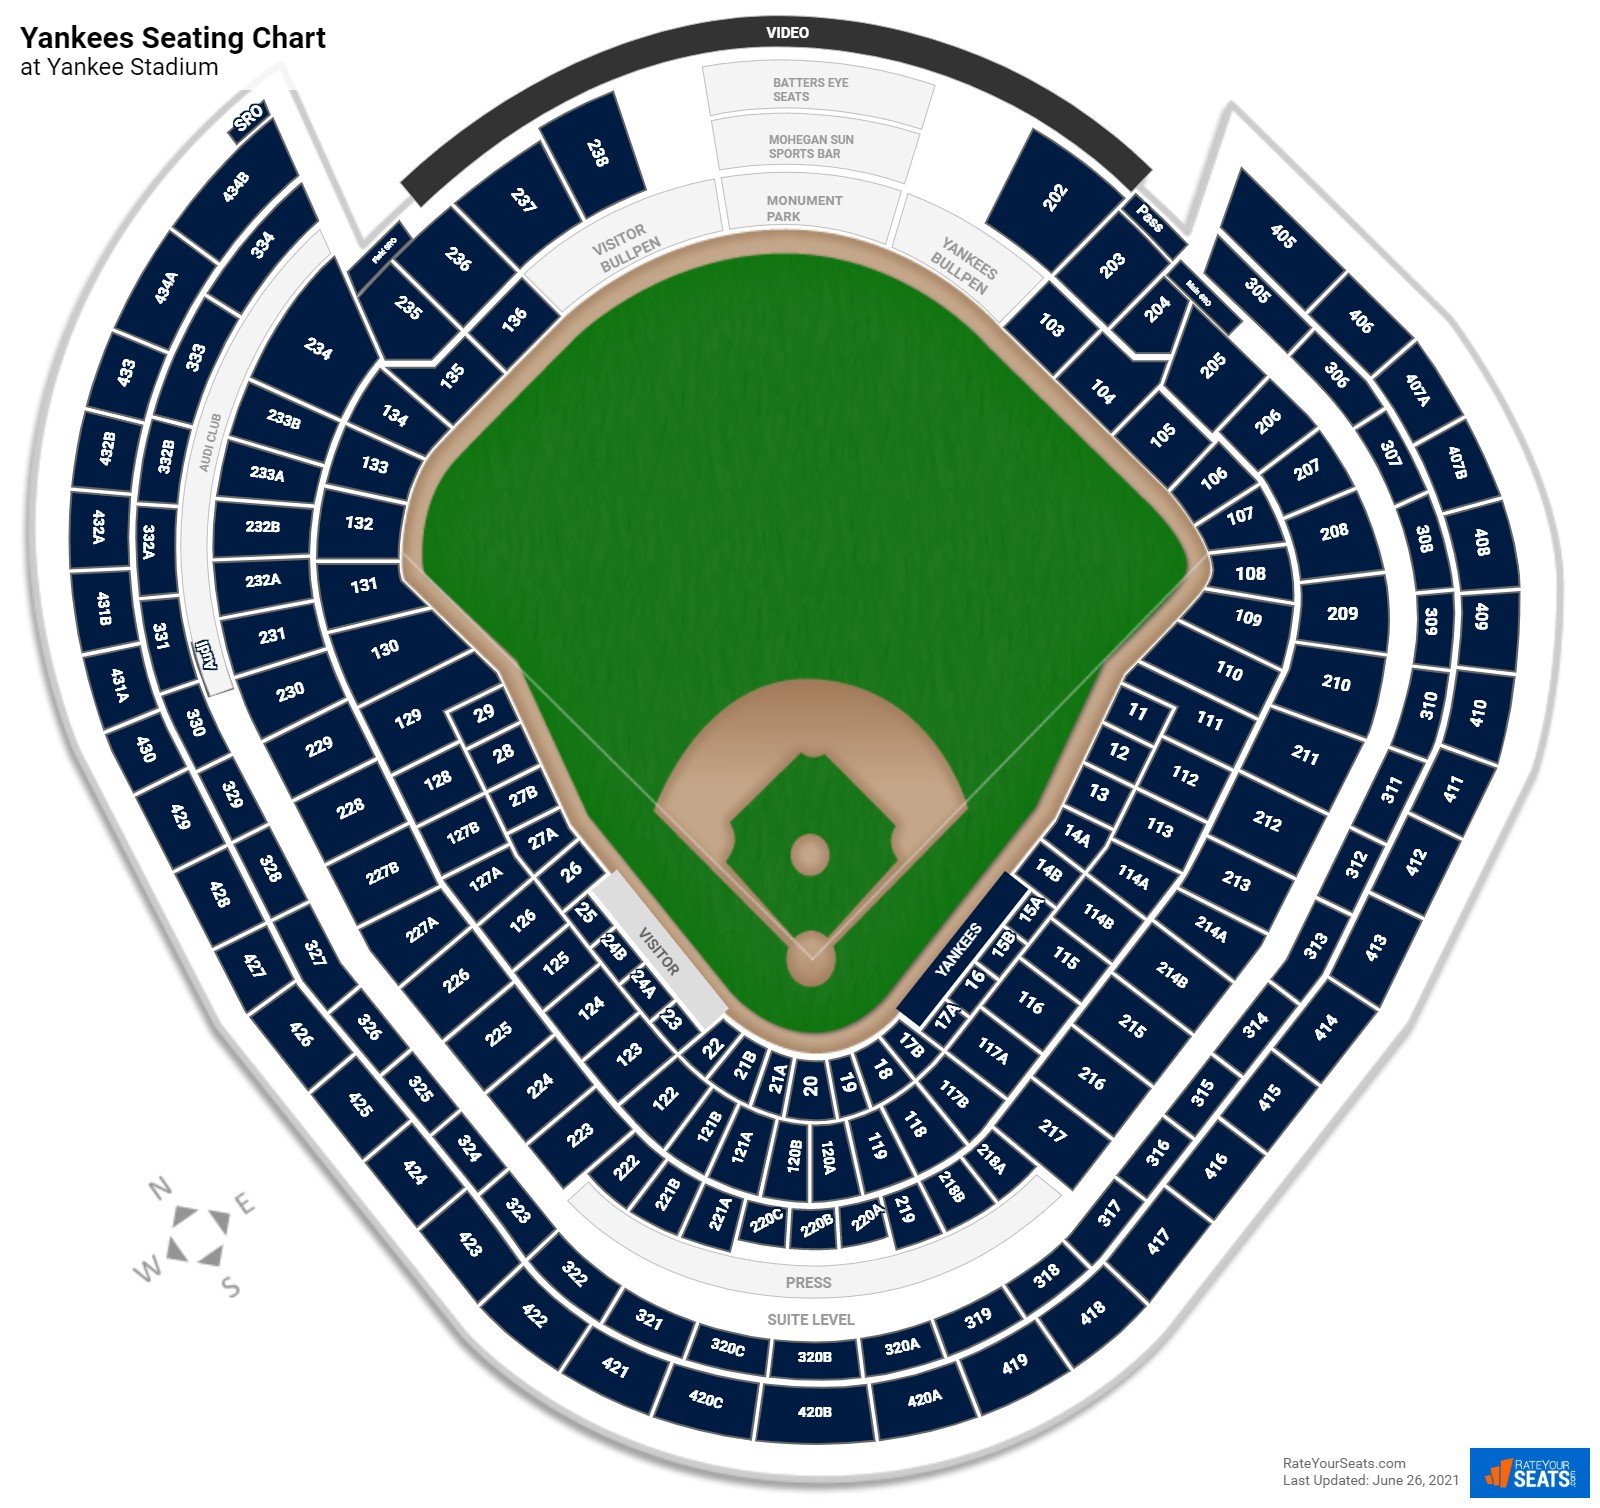 Yankees Seating Chart At Yankee Stadium 